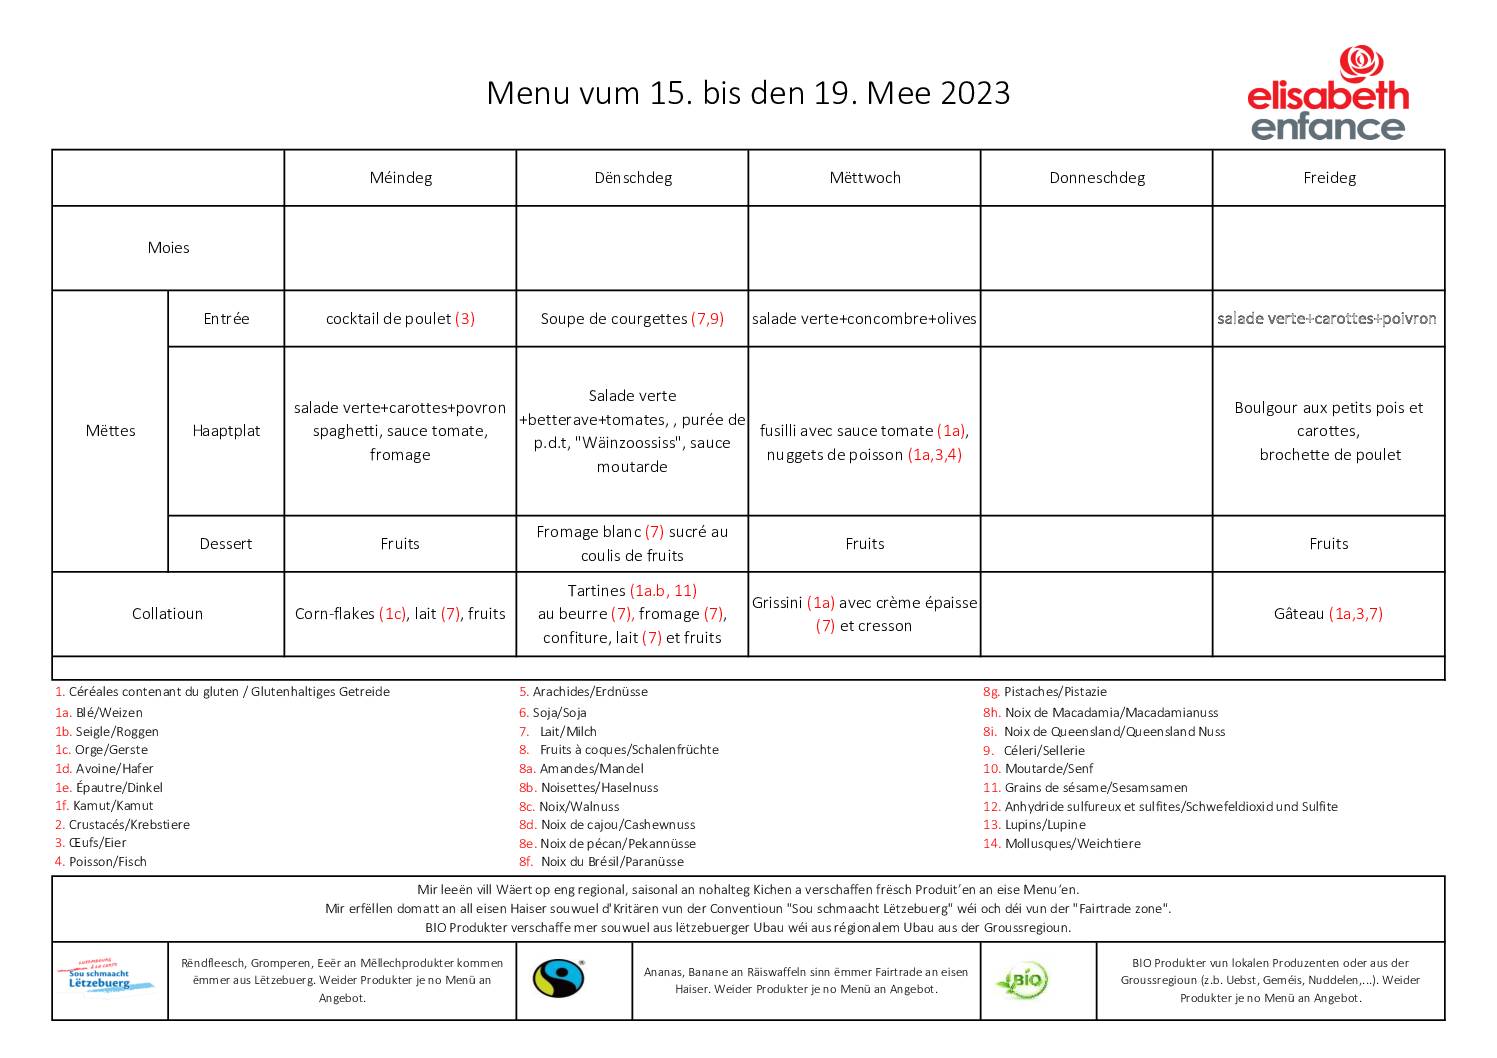 menus de la semaine du 15 au 19 mai 2023